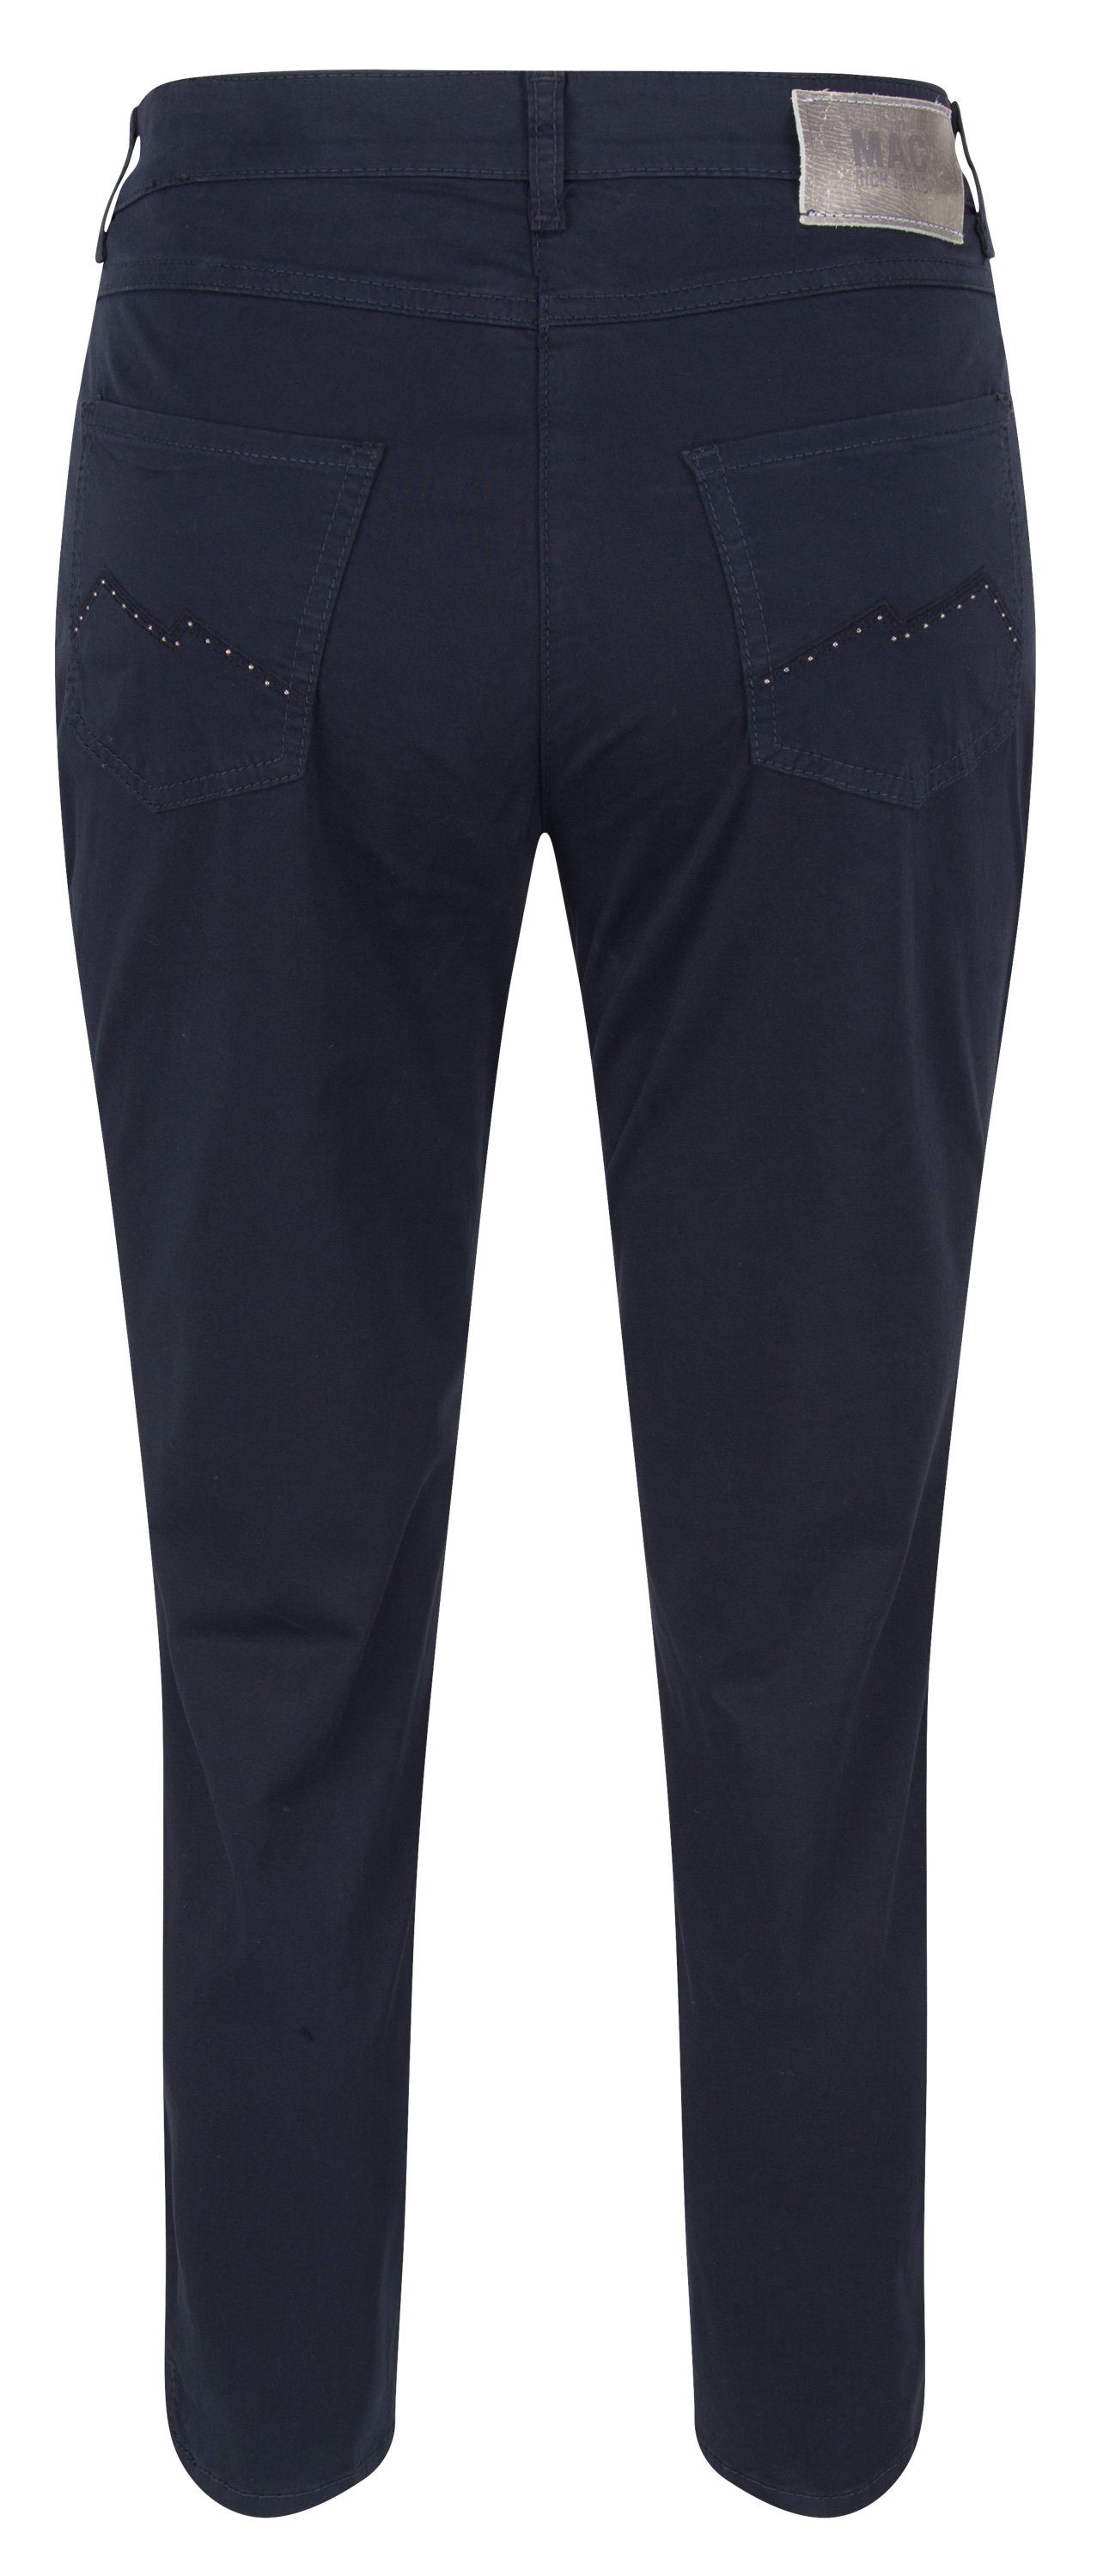 MAC Stretch-Jeans blue 5015-00-0430 MELANIE SUMMER 7/8 PPT 198R MAC dark